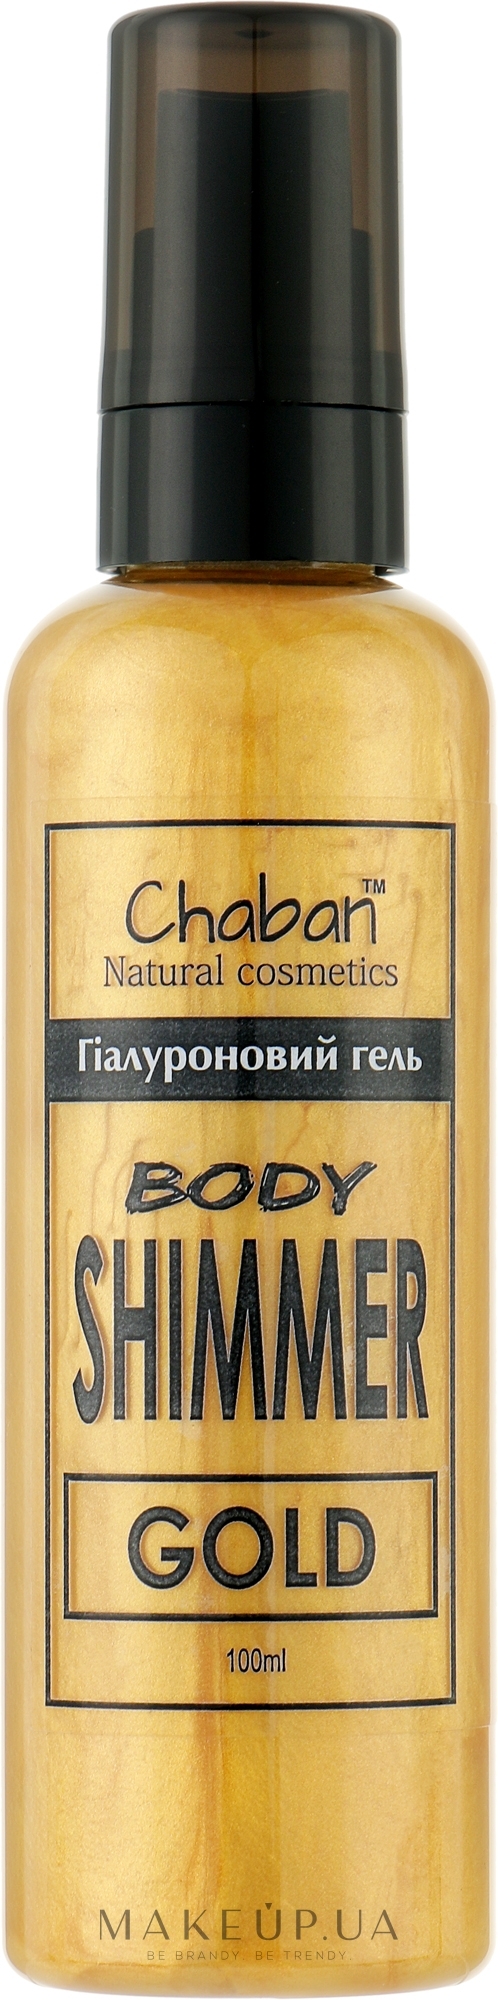 Гіалуроновий гель-шимер для тіла - Chaban Gold Body Shimmer — фото 100ml